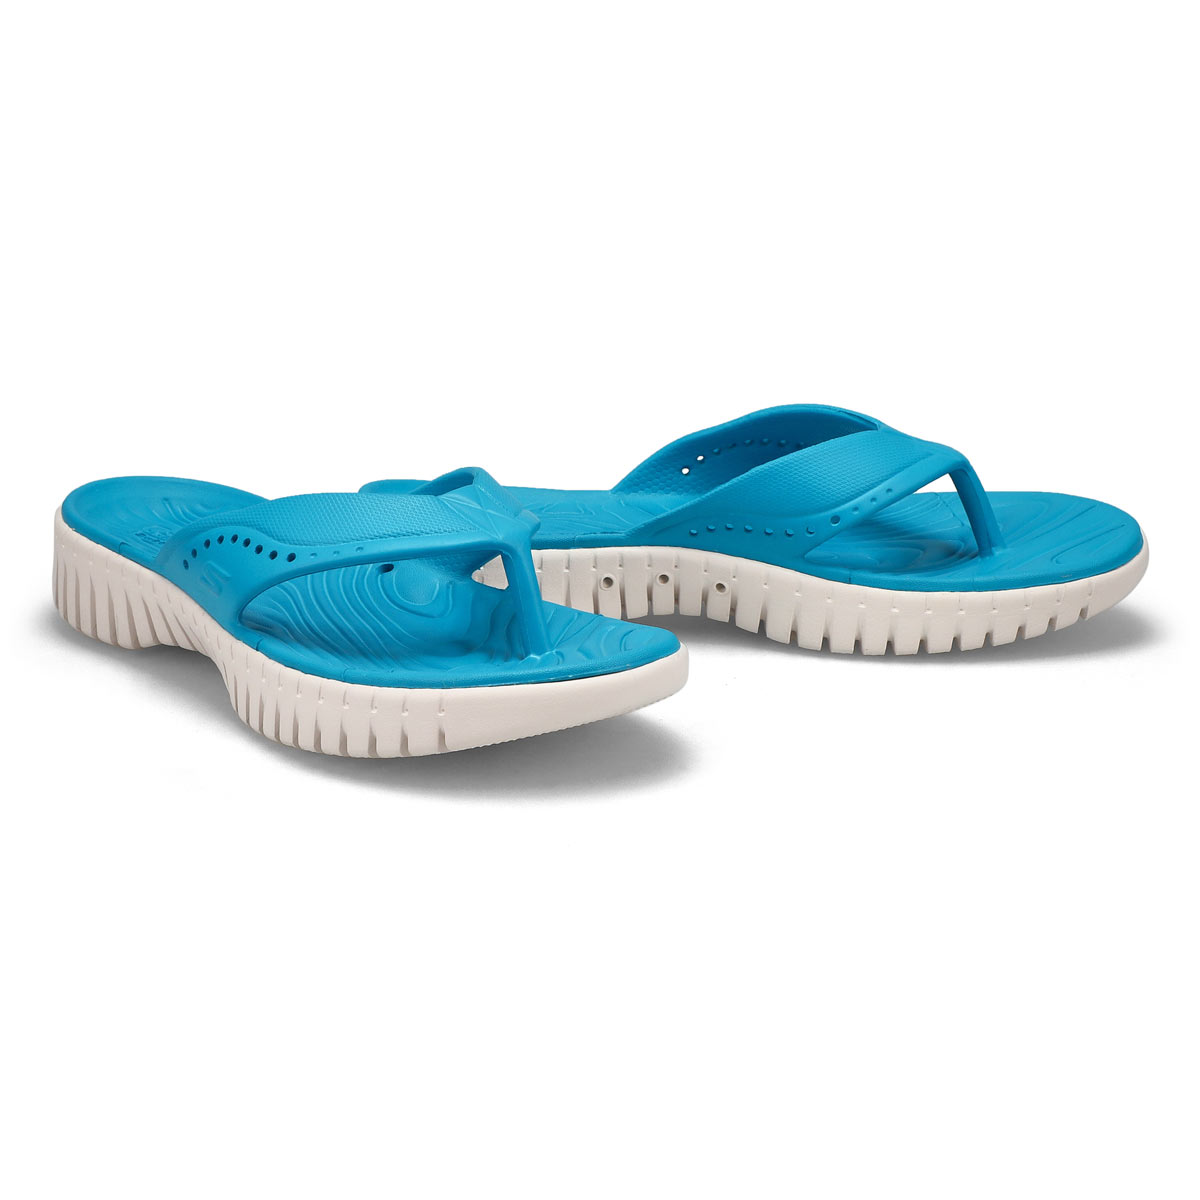 Women's Go Walk Smart Sandal - Blue